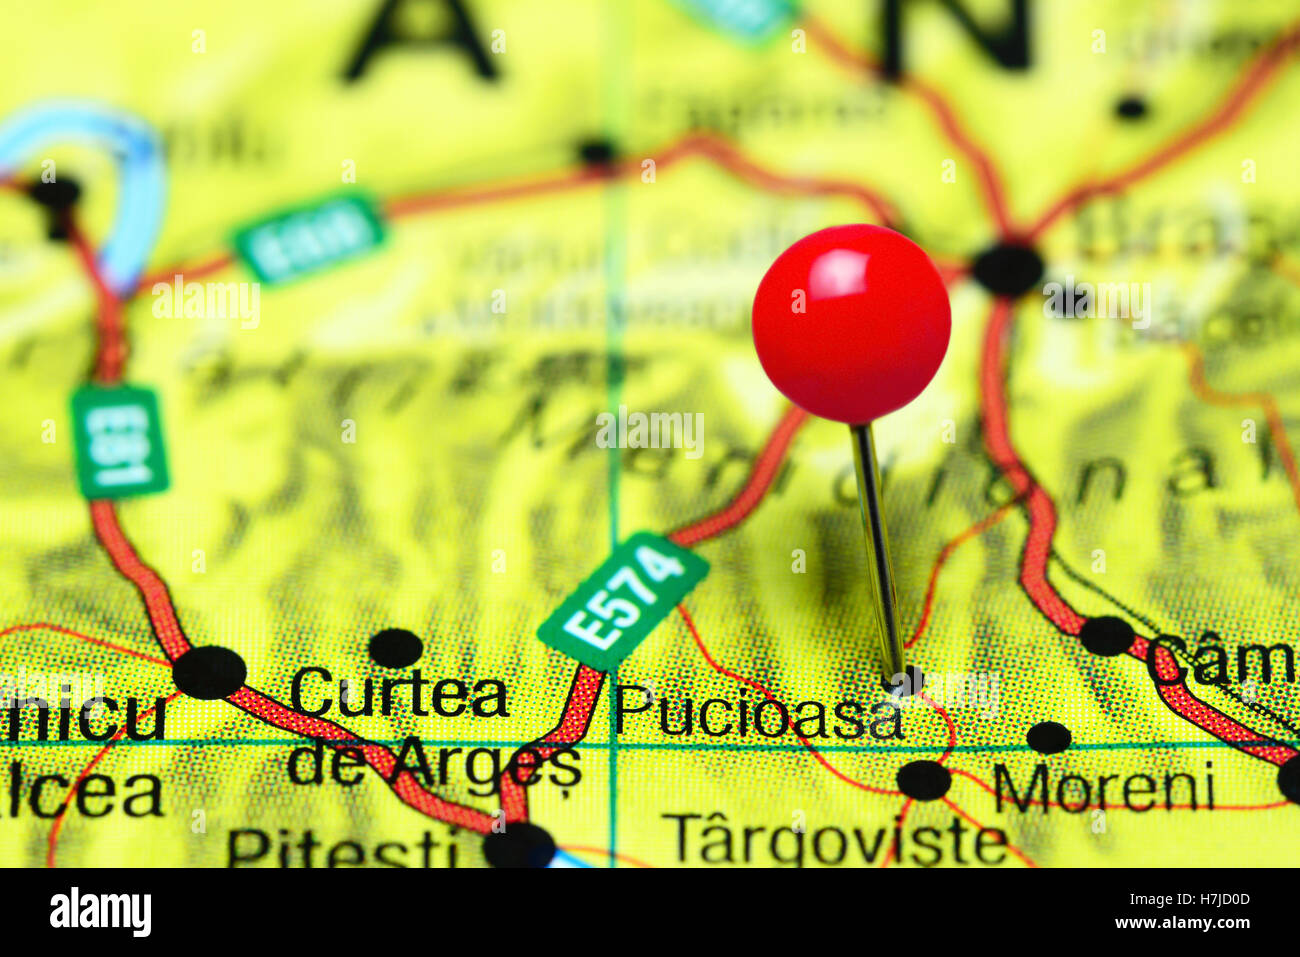 Pucioasa pinned on a map of Romania Stock Photo